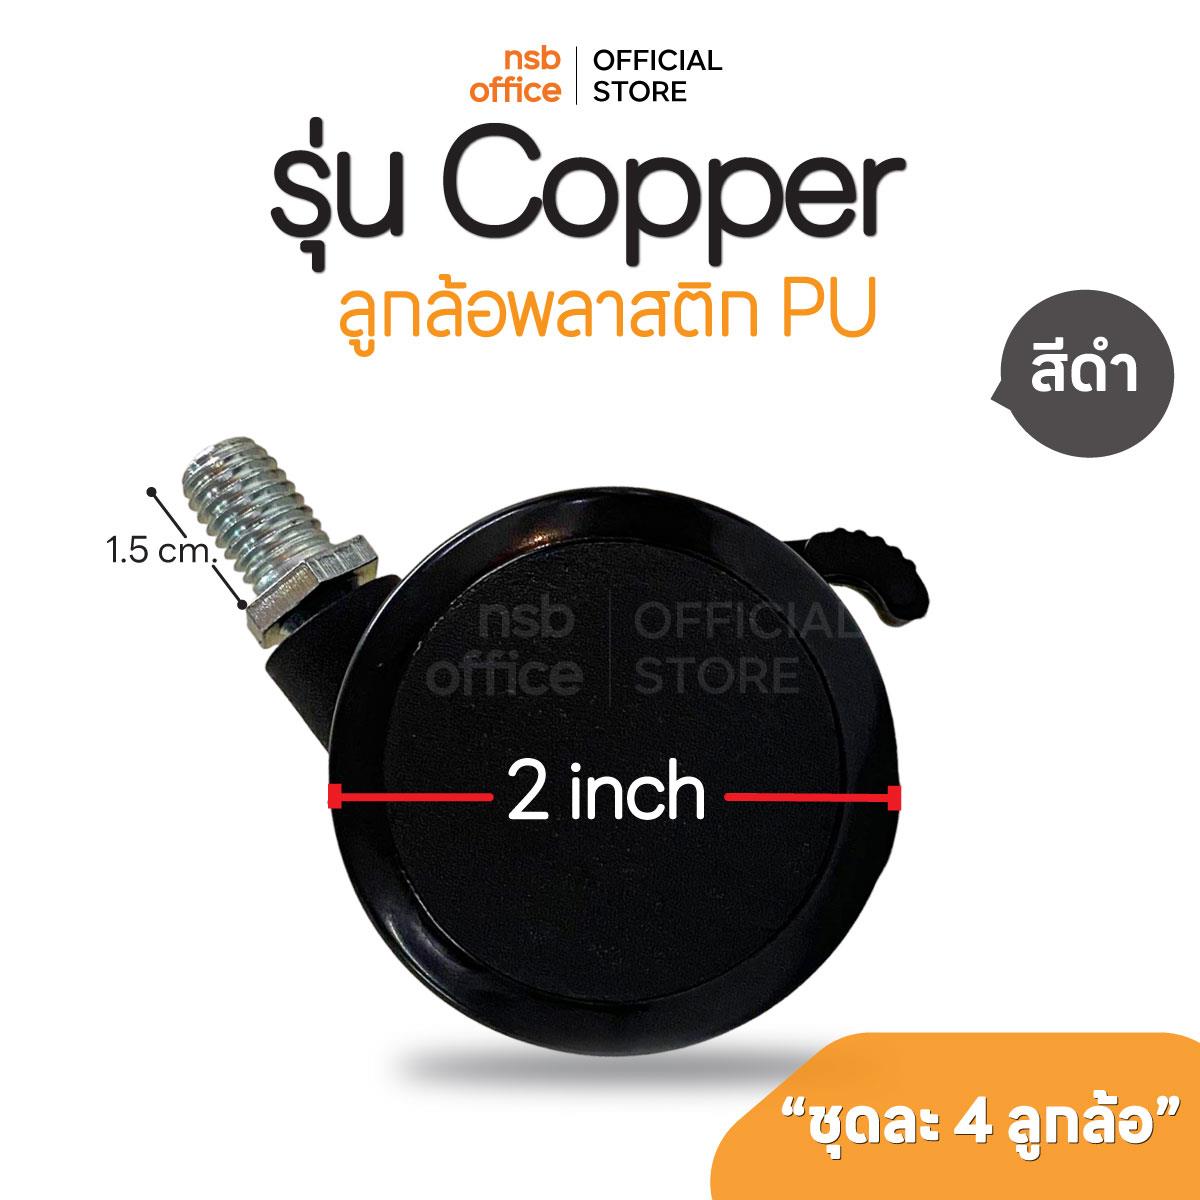 B27A108:ลูกล้อพลาสติก pu รุ่น Copper (คอปเปอร์)  ขนาด 2 นิ้ว (5 ซม.) เกลียว 10 มม. ชุดละ 4 ลูก